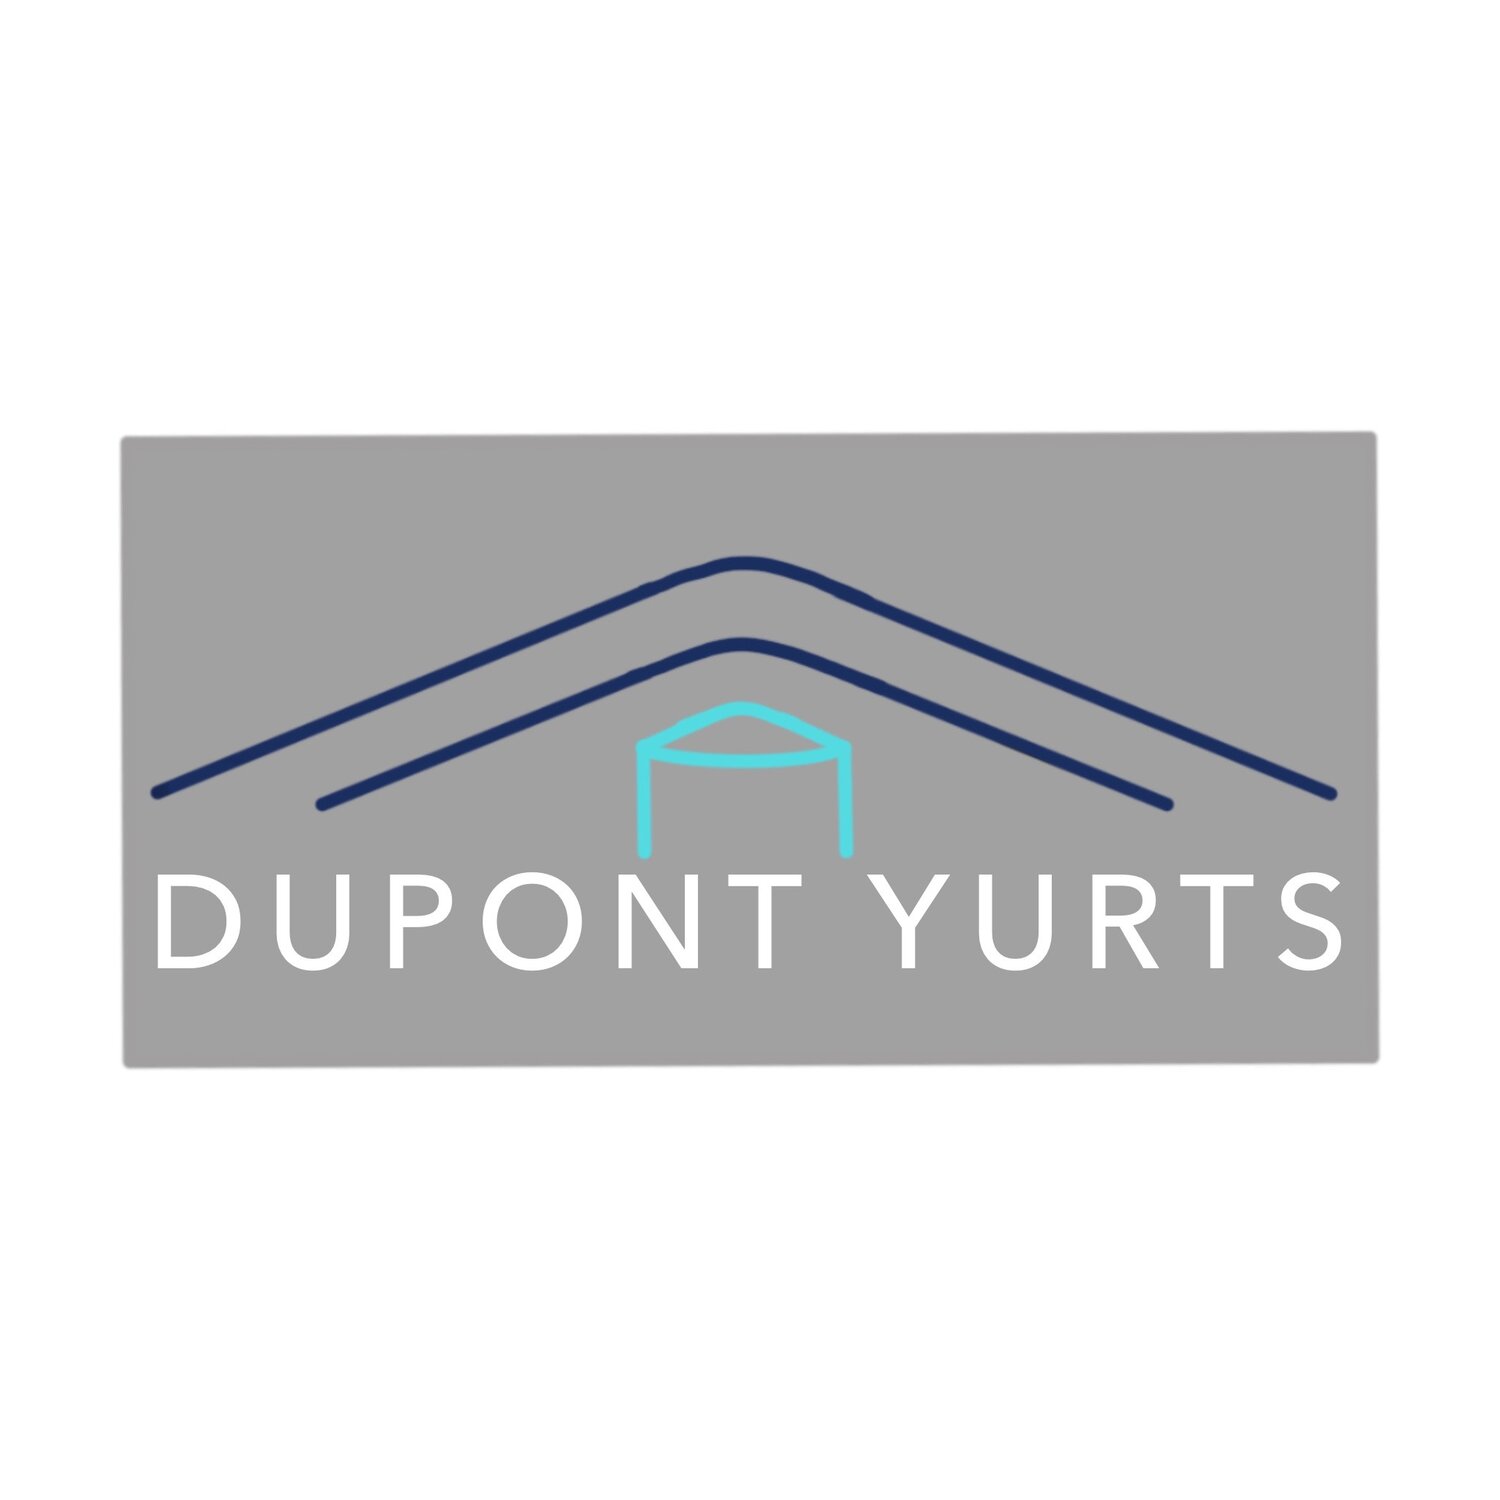 DuPont Yurts